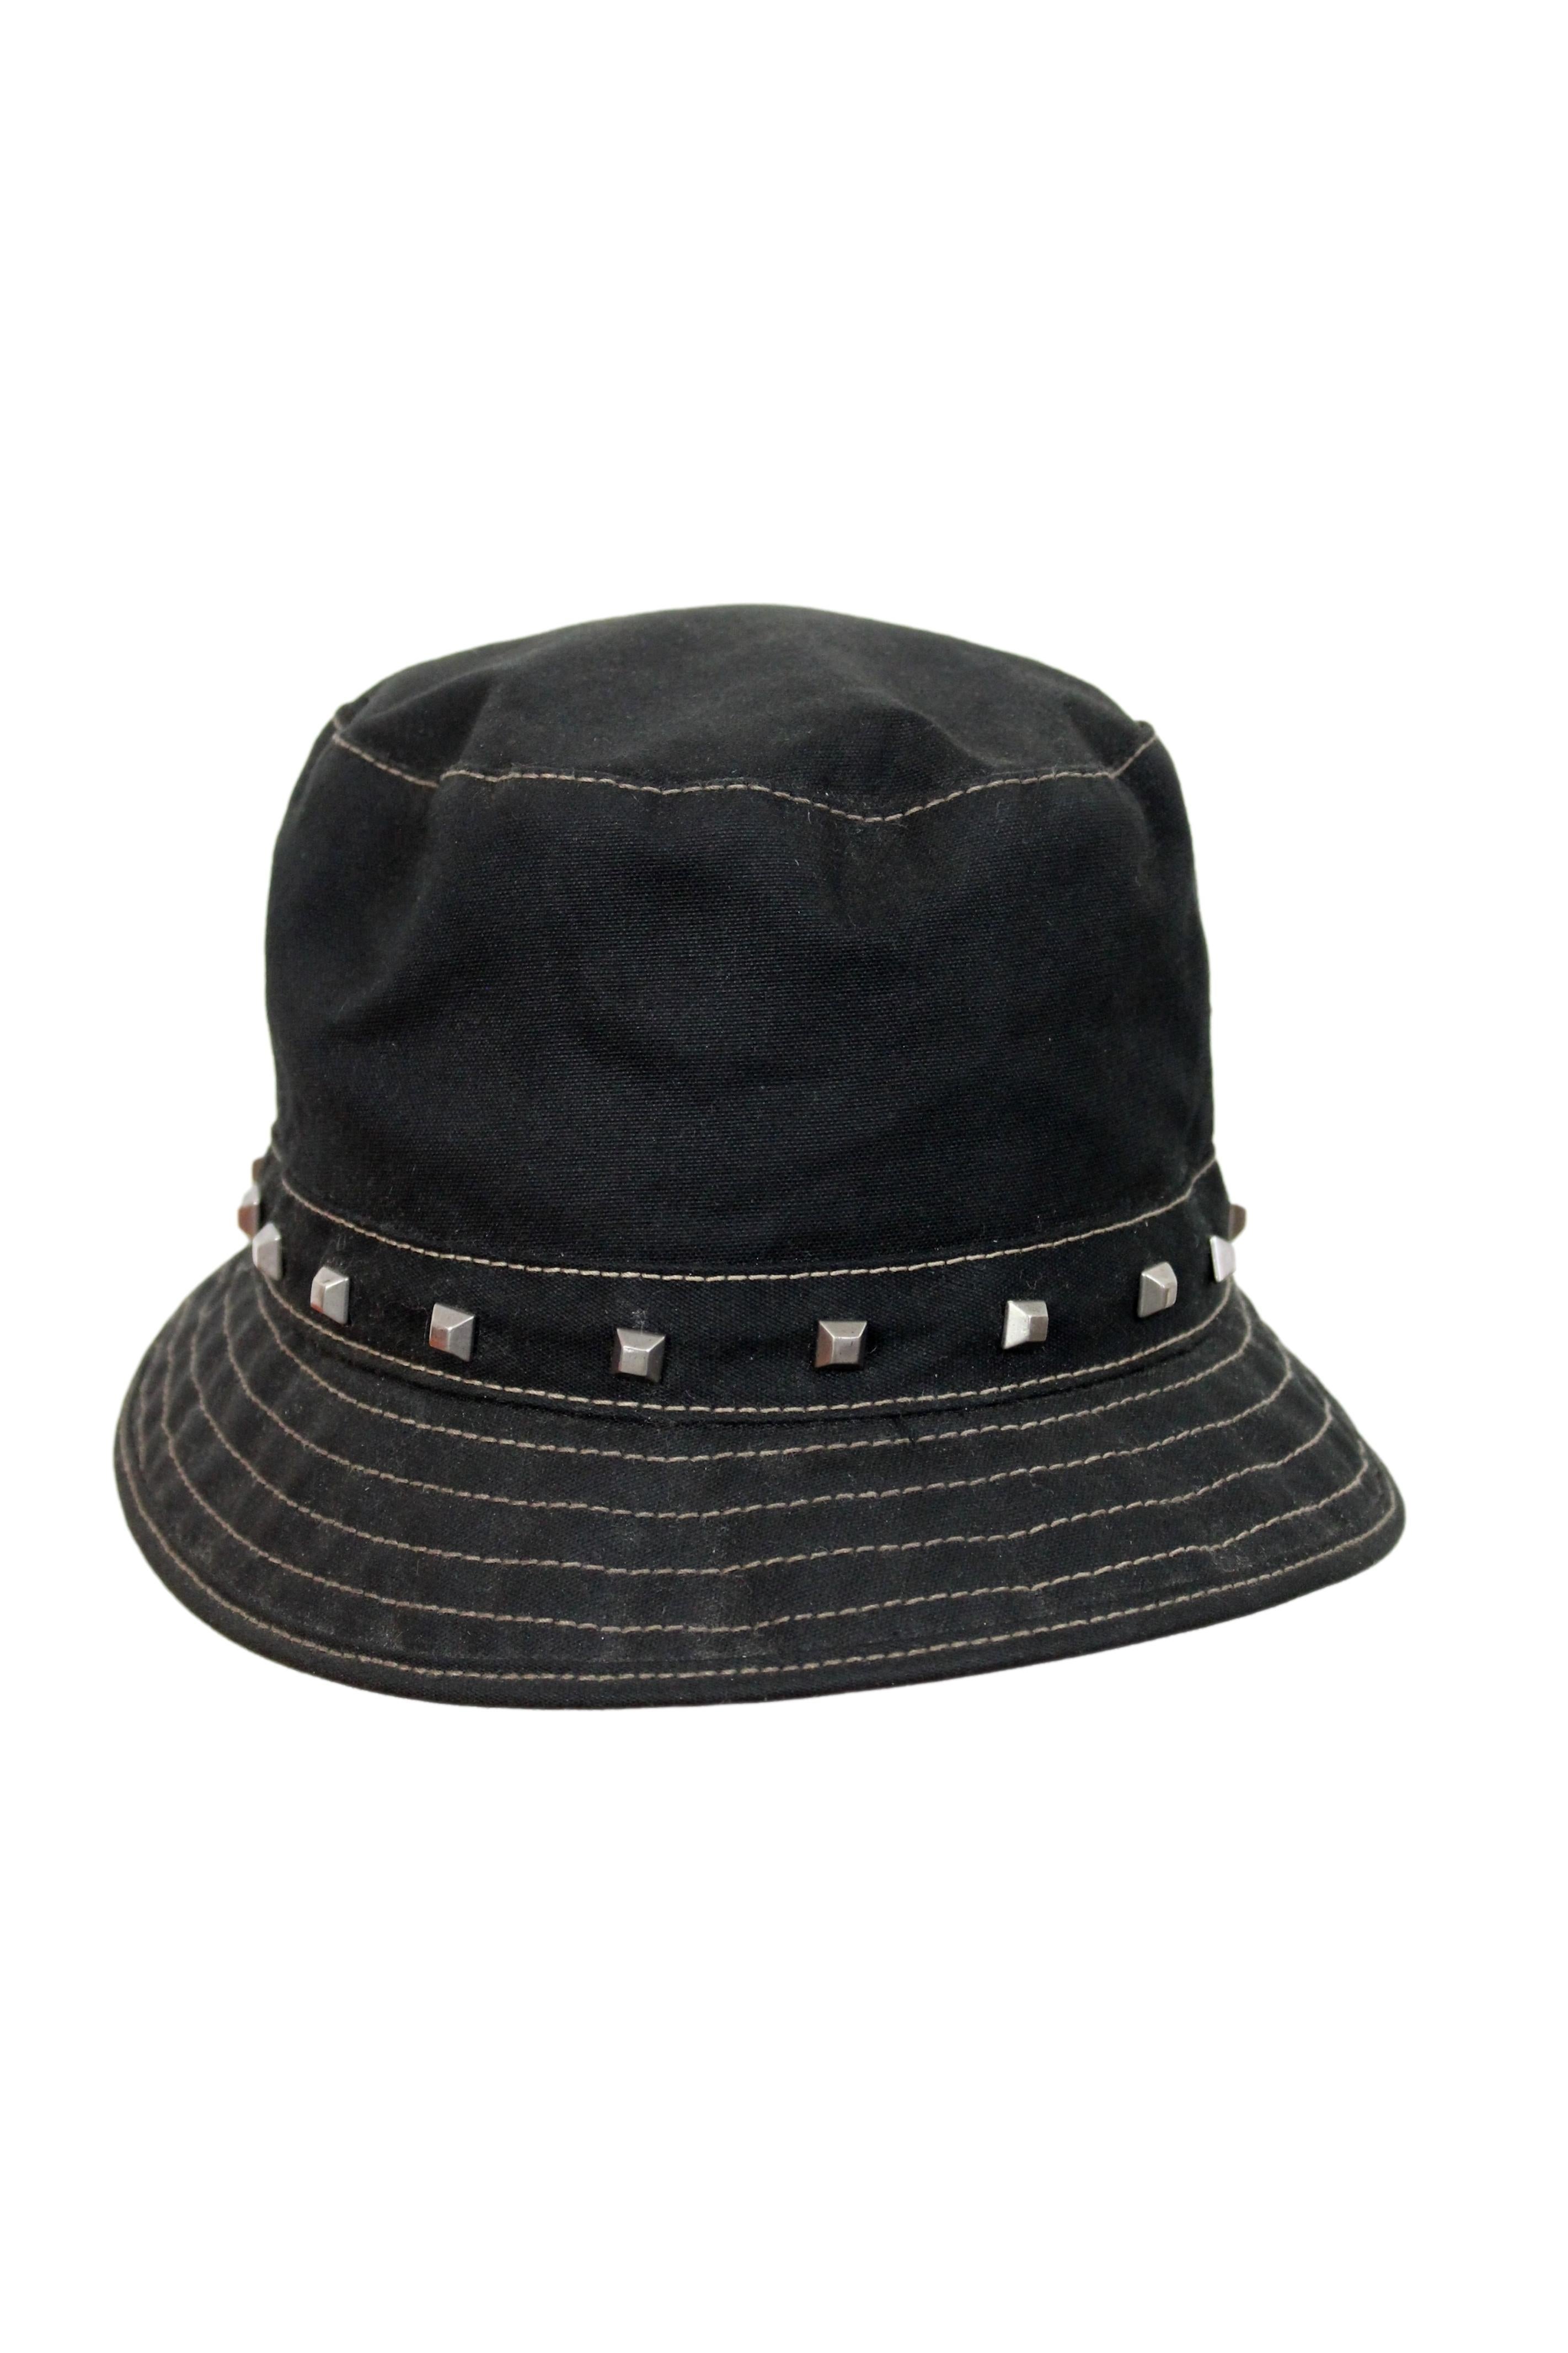 gucci black fedora hat